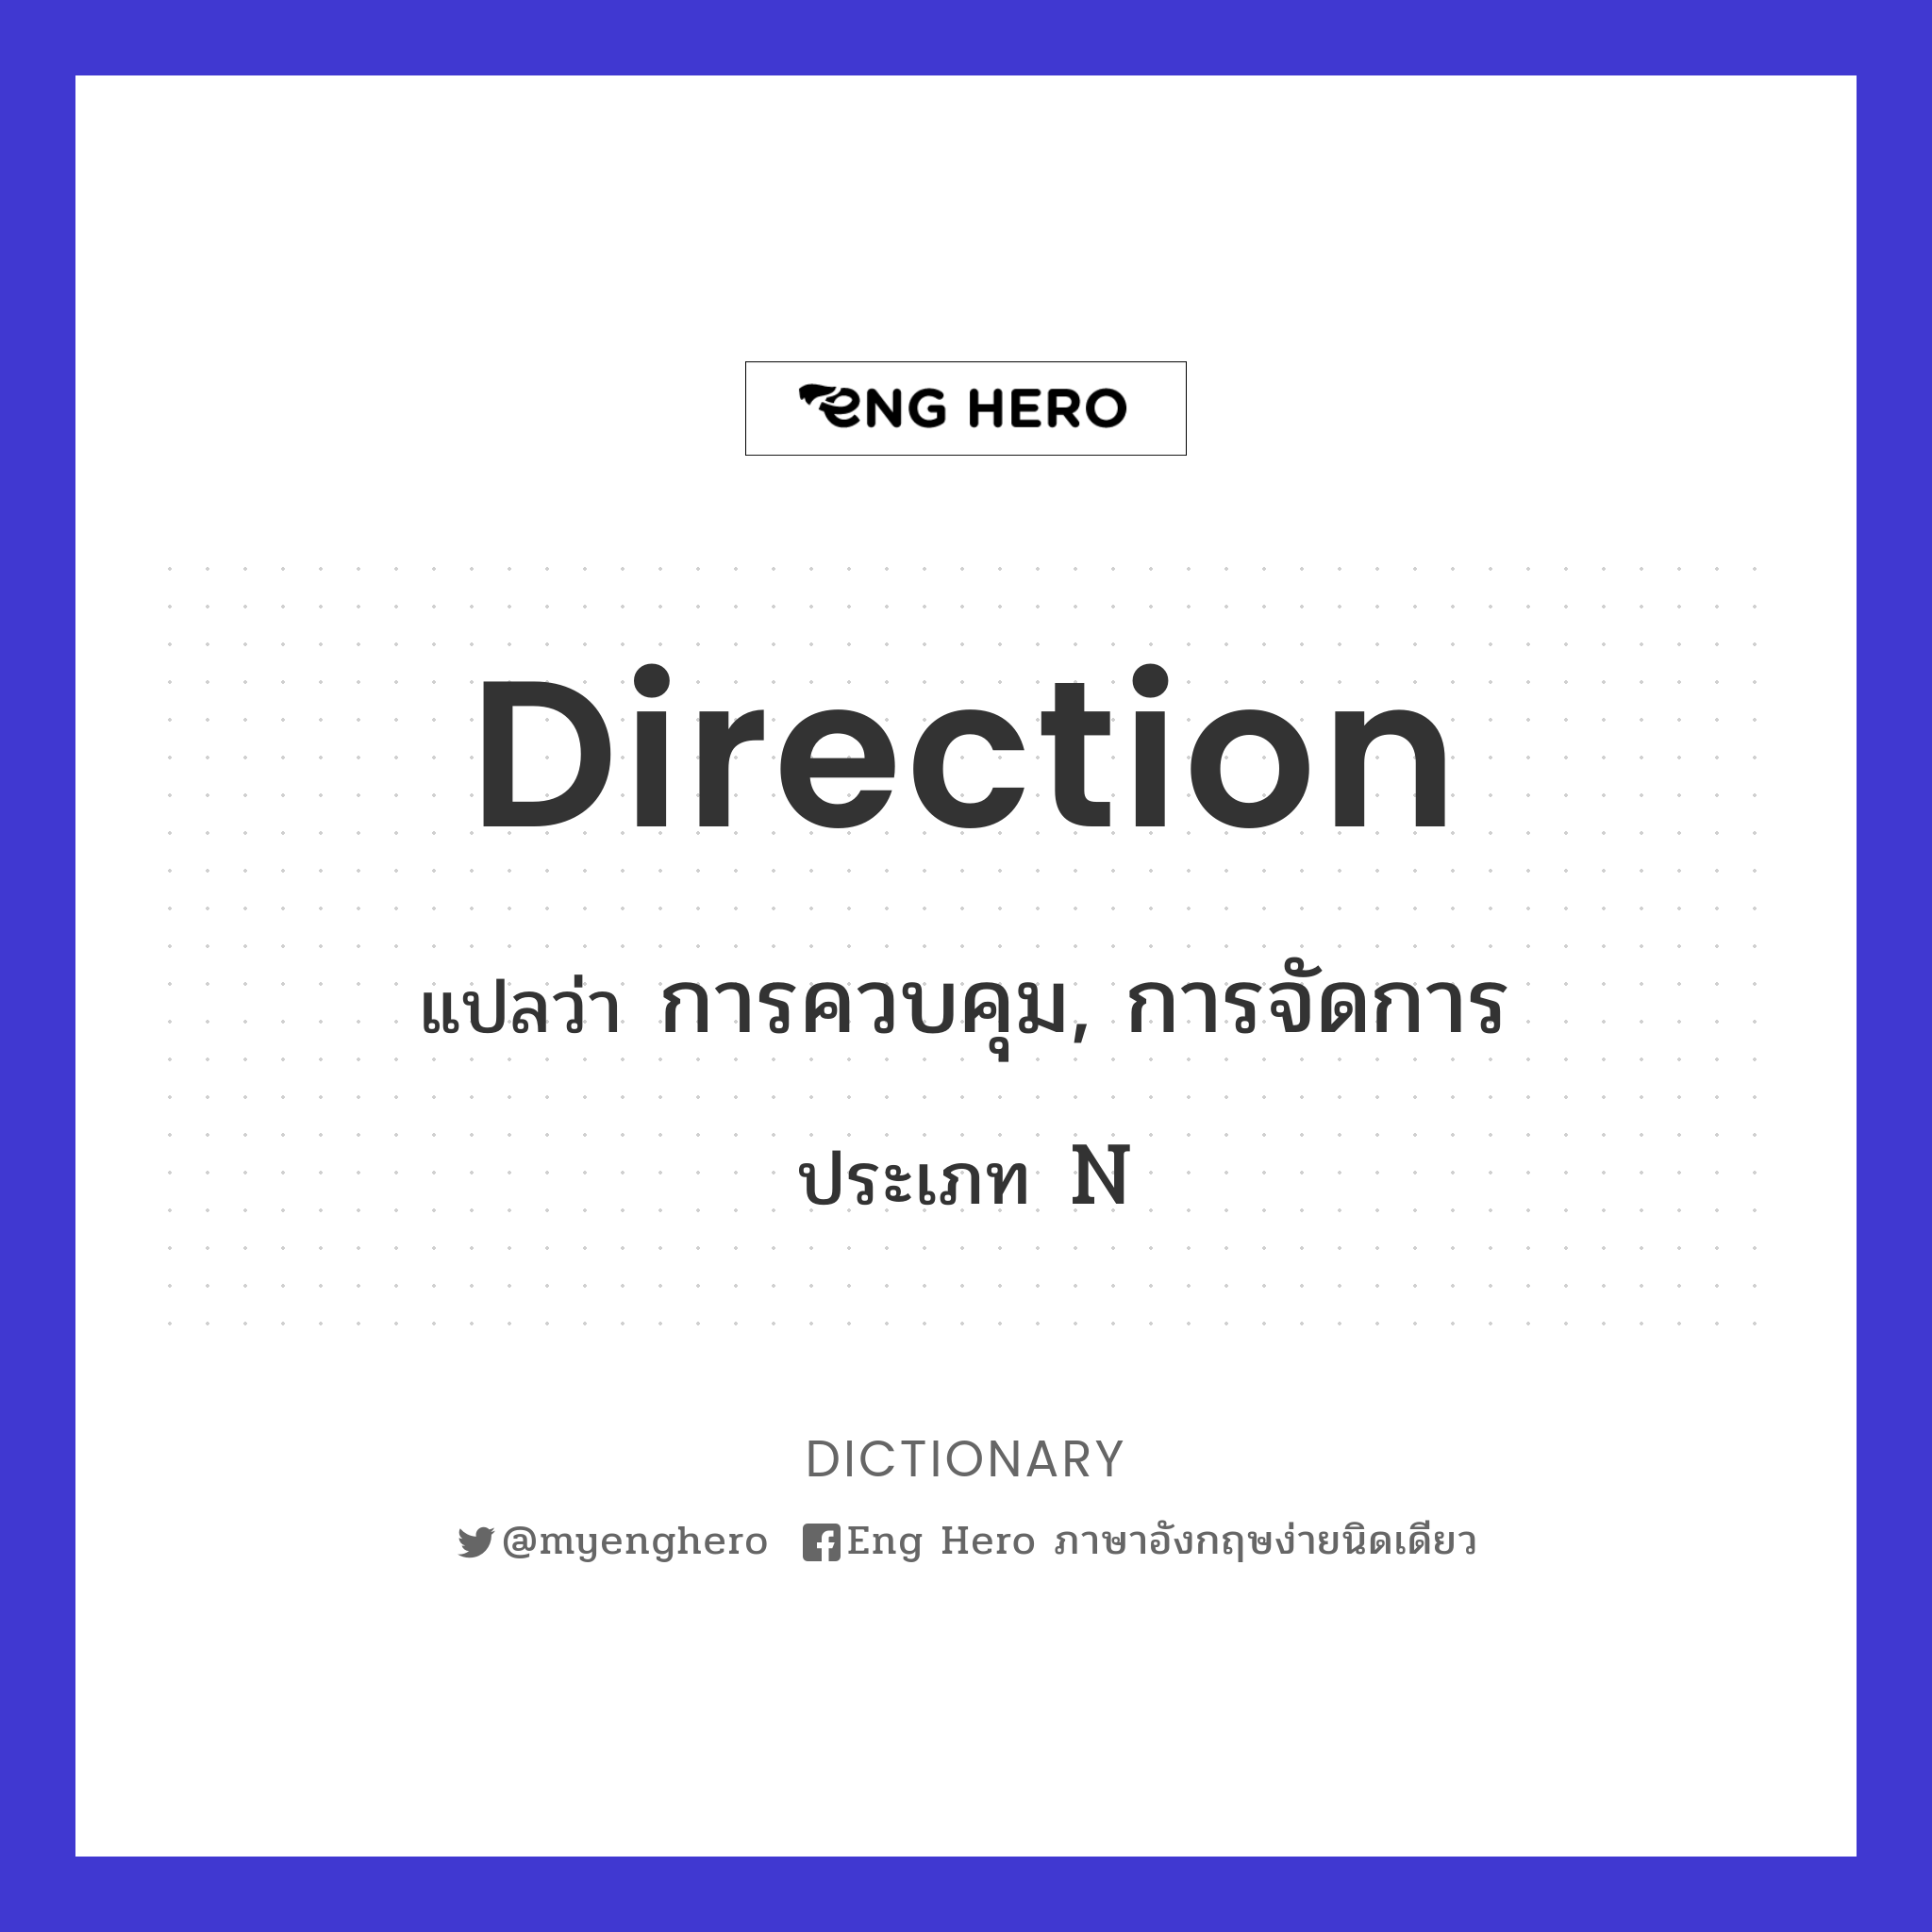 direction